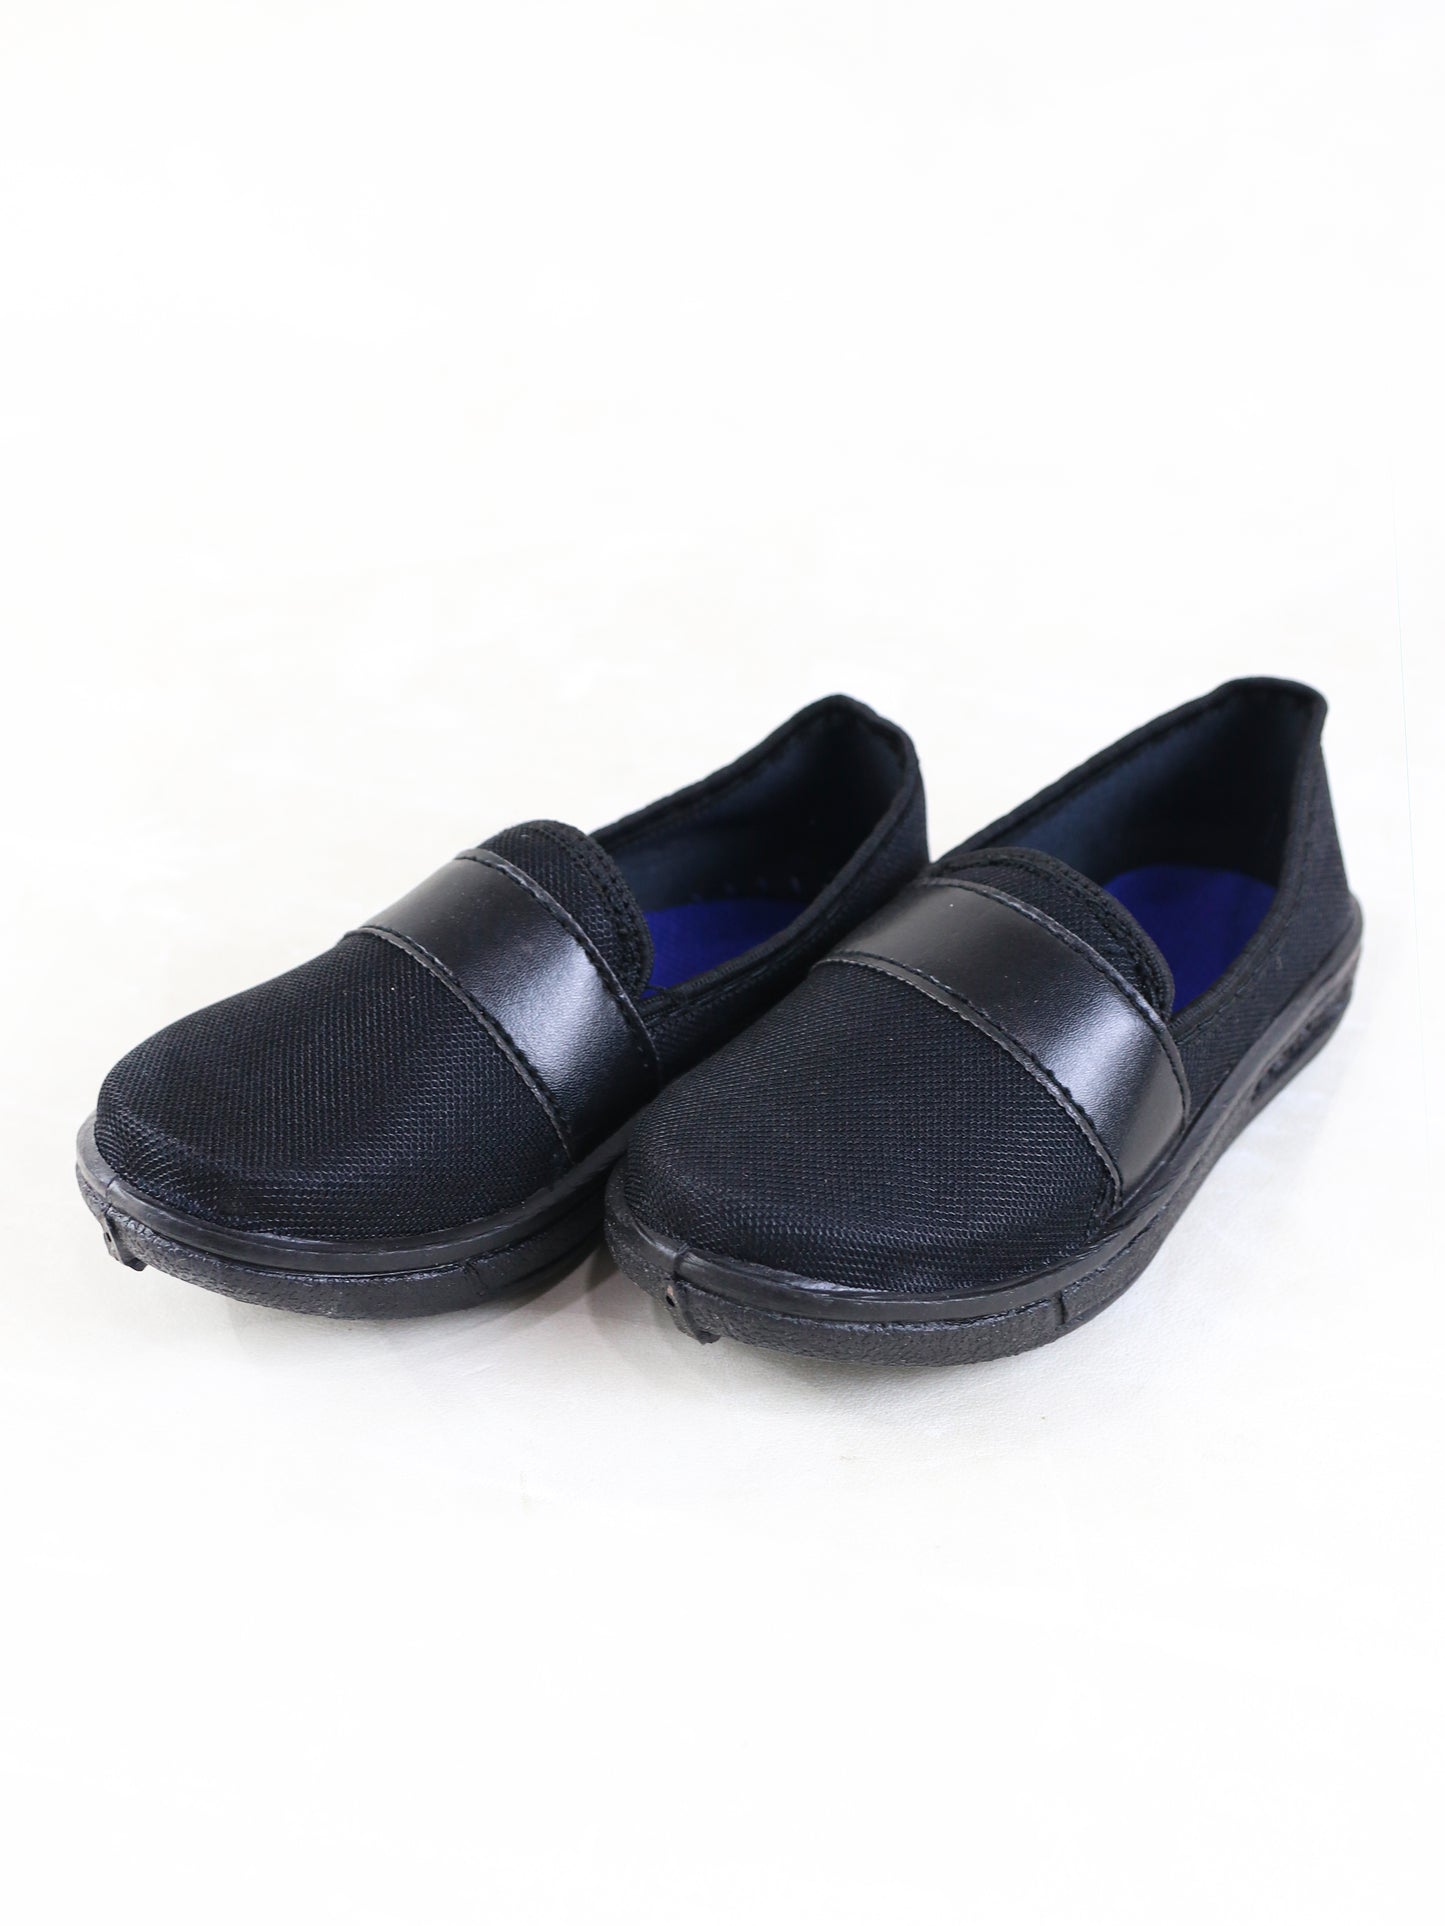 BS55 Boys Slip-On Shoes 5Yrs - 8Yrs Black